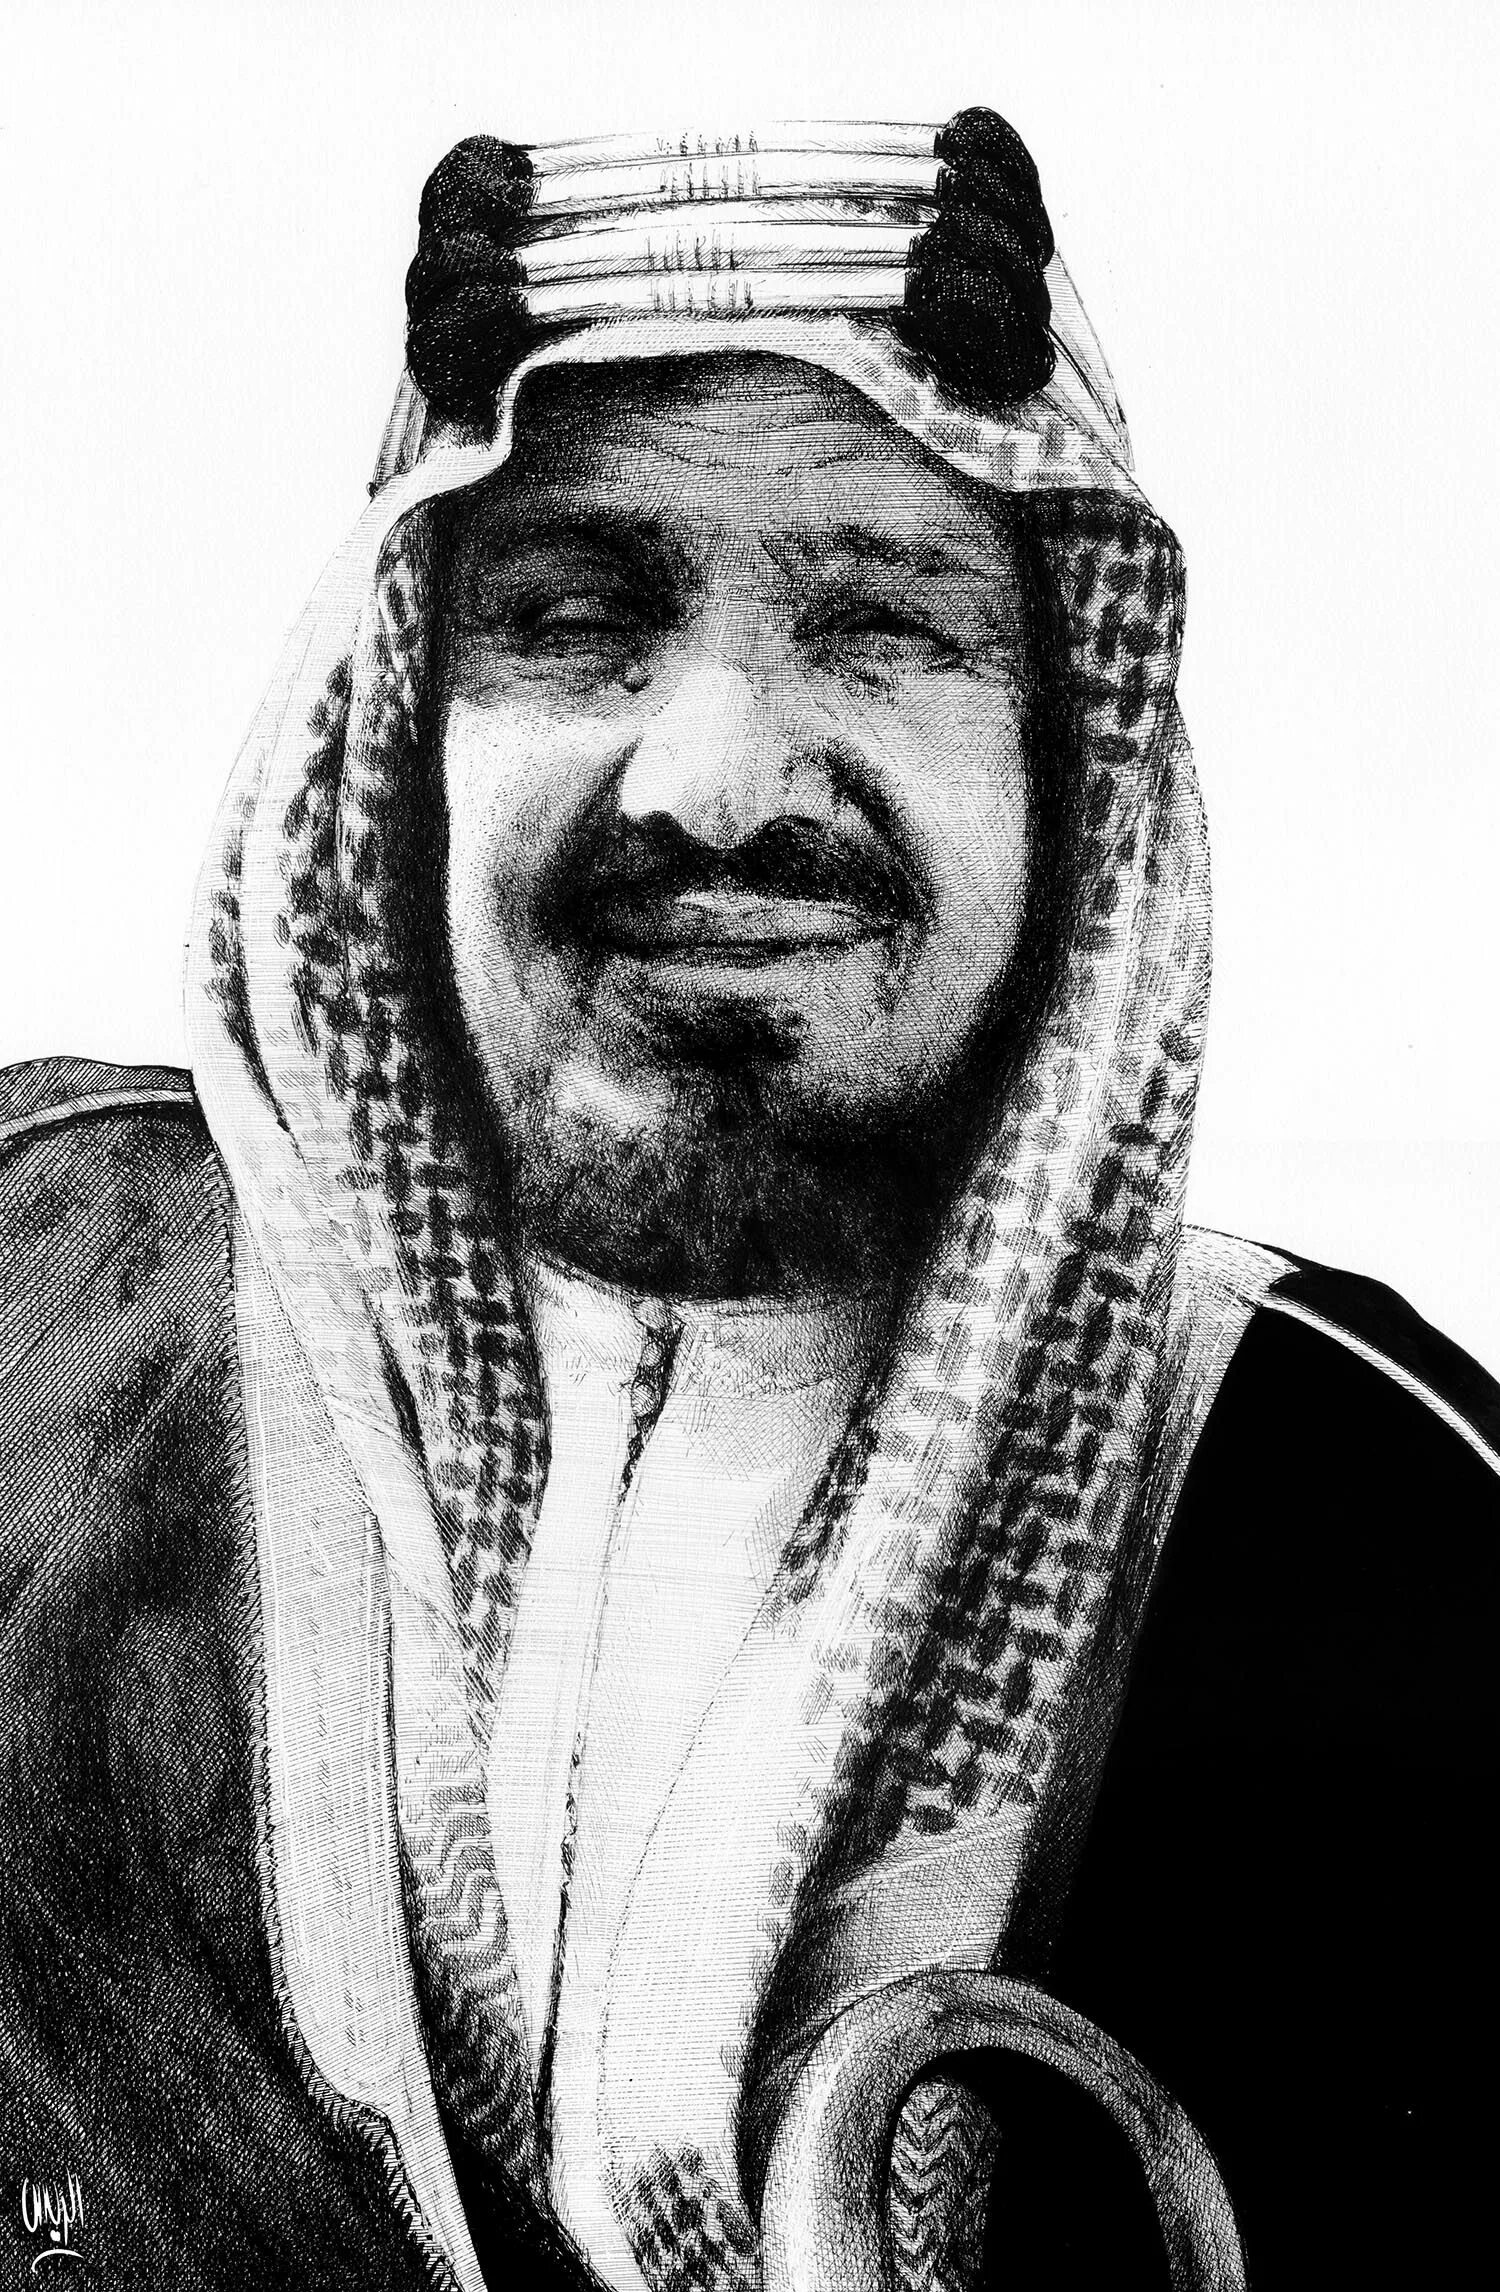 Сауд ибн фейсал аль сауд. Абдель Азиз ибн Сауд. Абдул-Азиз ибн Абдуррахман Аль Сауд. Первый Король Саудовской Аравии Абд Аль-Азиз ибн Сауд. Король Саудовской Аравии Фейсал ибн Абдель Азиз Аль Сауд.